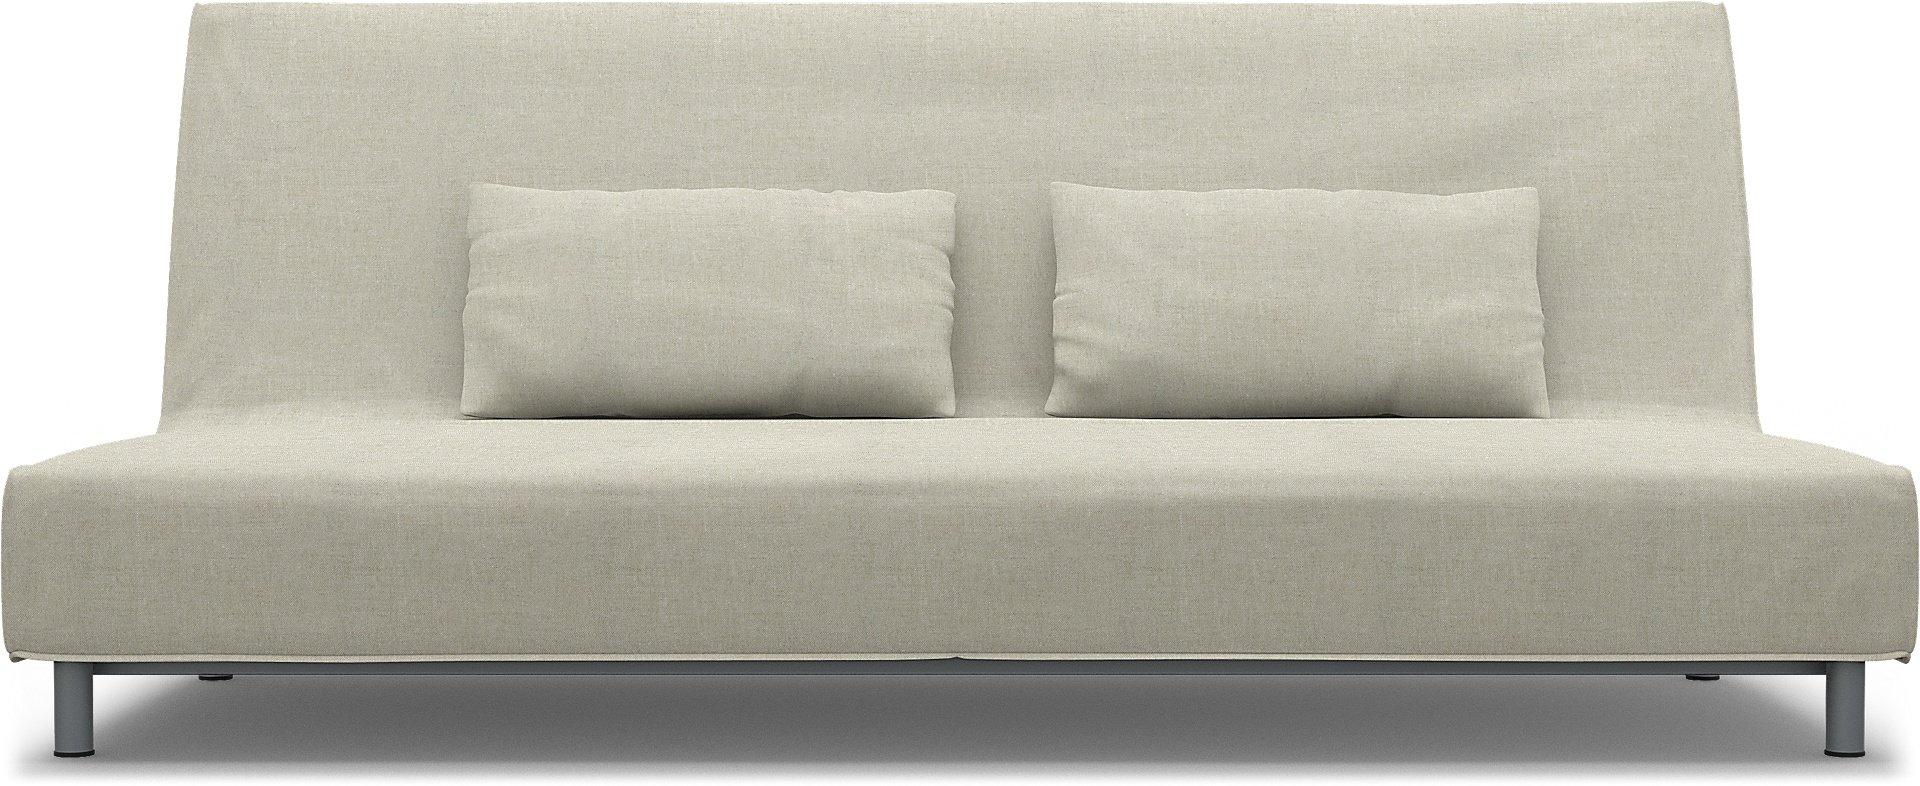 IKEA - Beddinge Sofa Bed Cover, Natural, Linen - Bemz